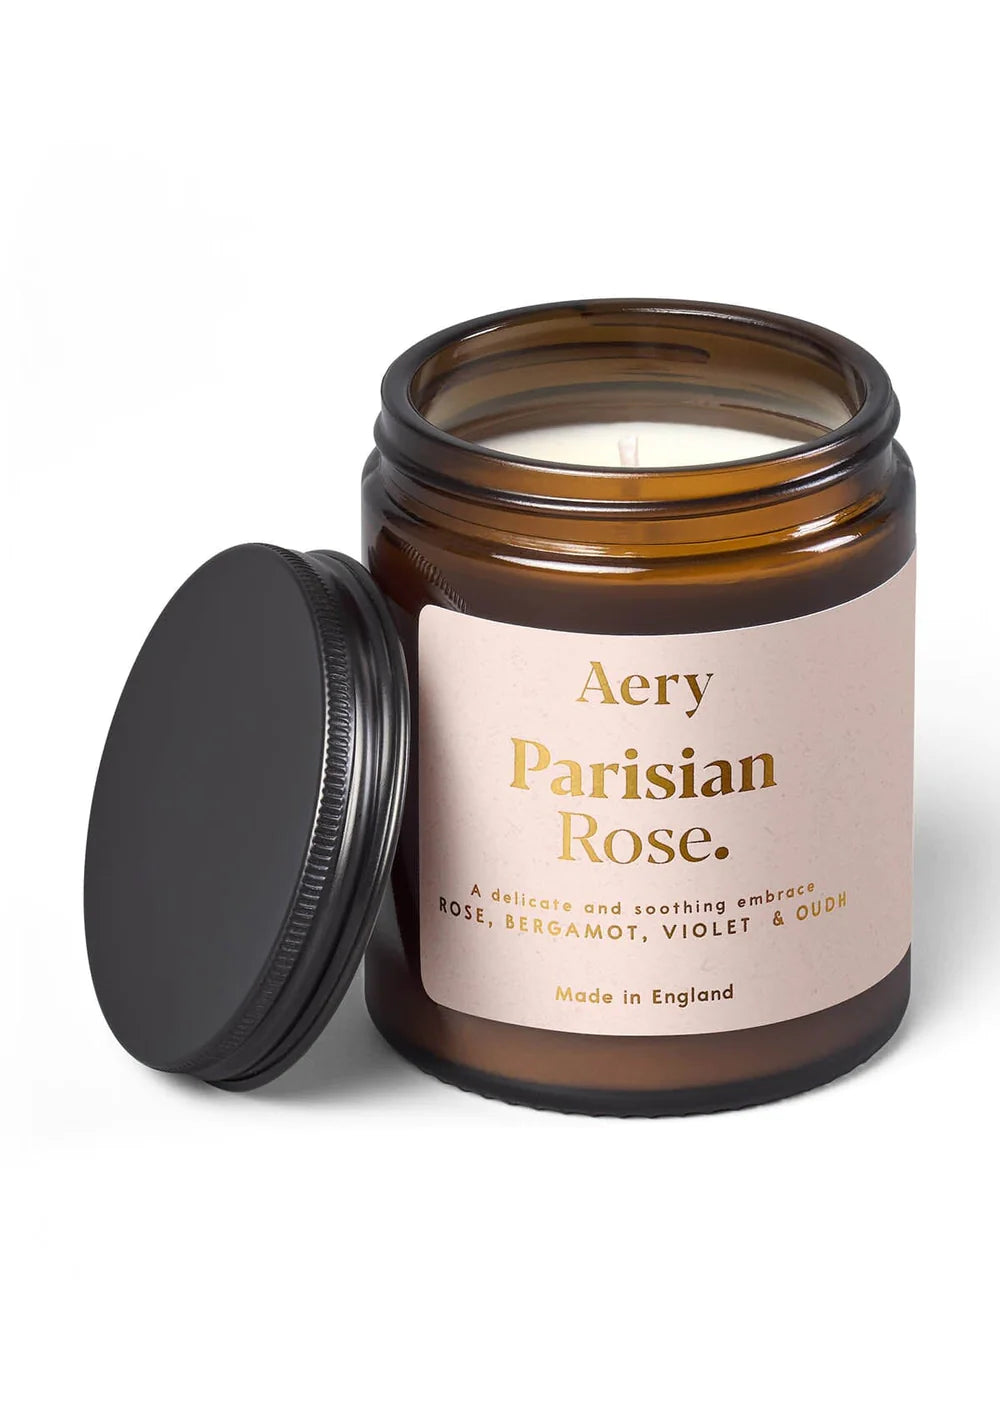 Aery Parisian Rose Scented Jar Candle - Rose Bergamot and Violet